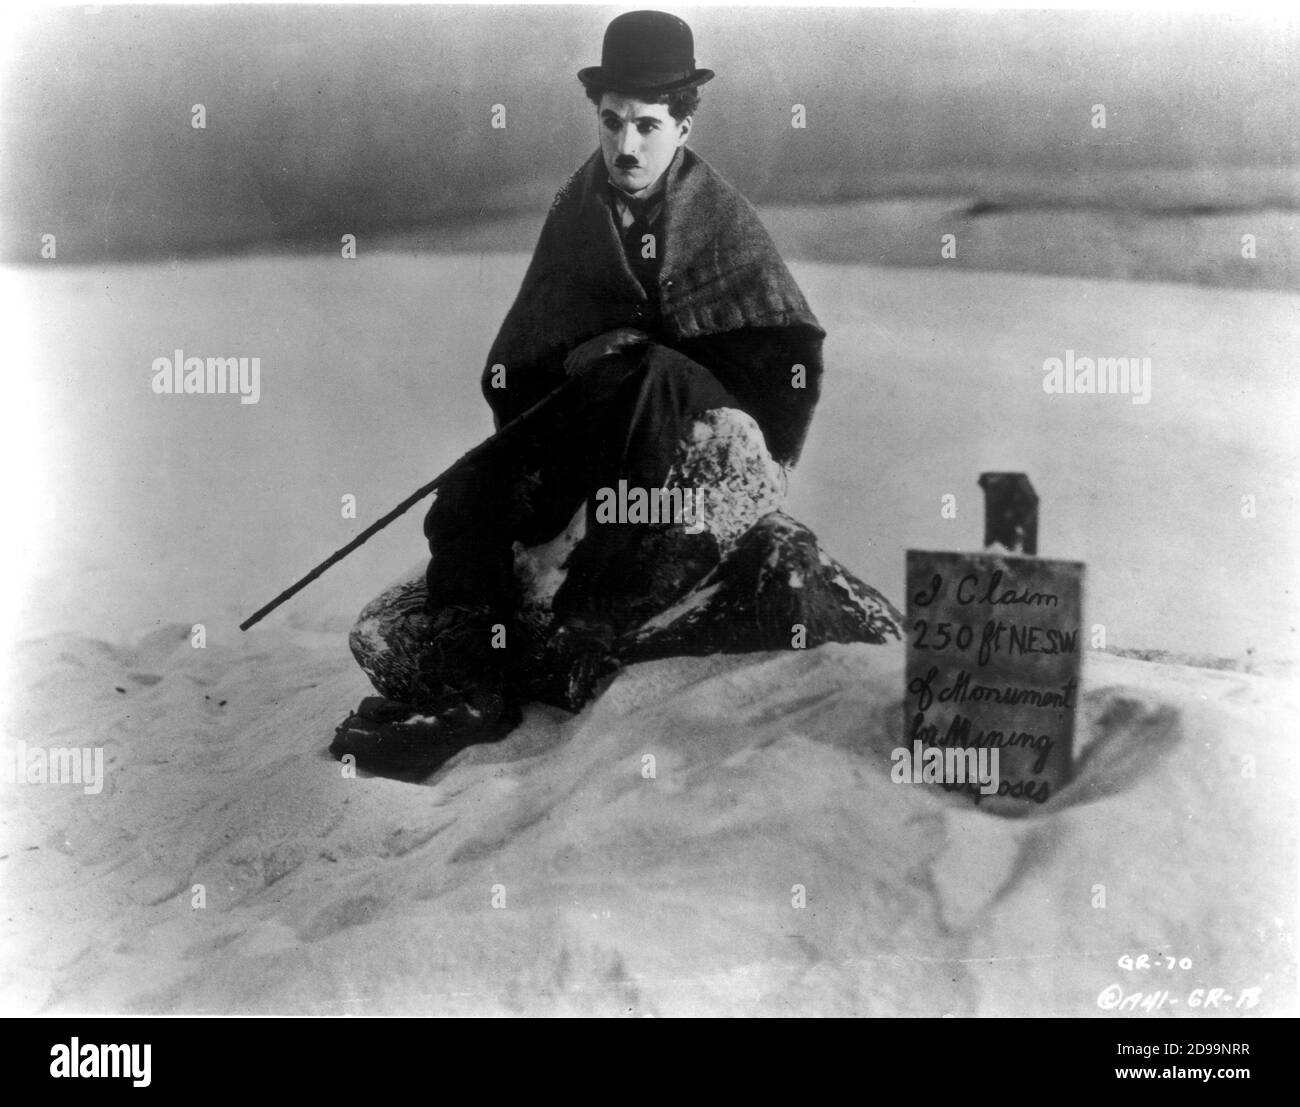 CHARLES CHAPLIN comme Charlot dans L'OR RUSH ( 1925 - la Febbre dell' oro )  - réalisateur - regista - attore - acteur - FILM SILENCIEUX - CINÉMA MUTO -  cappello -